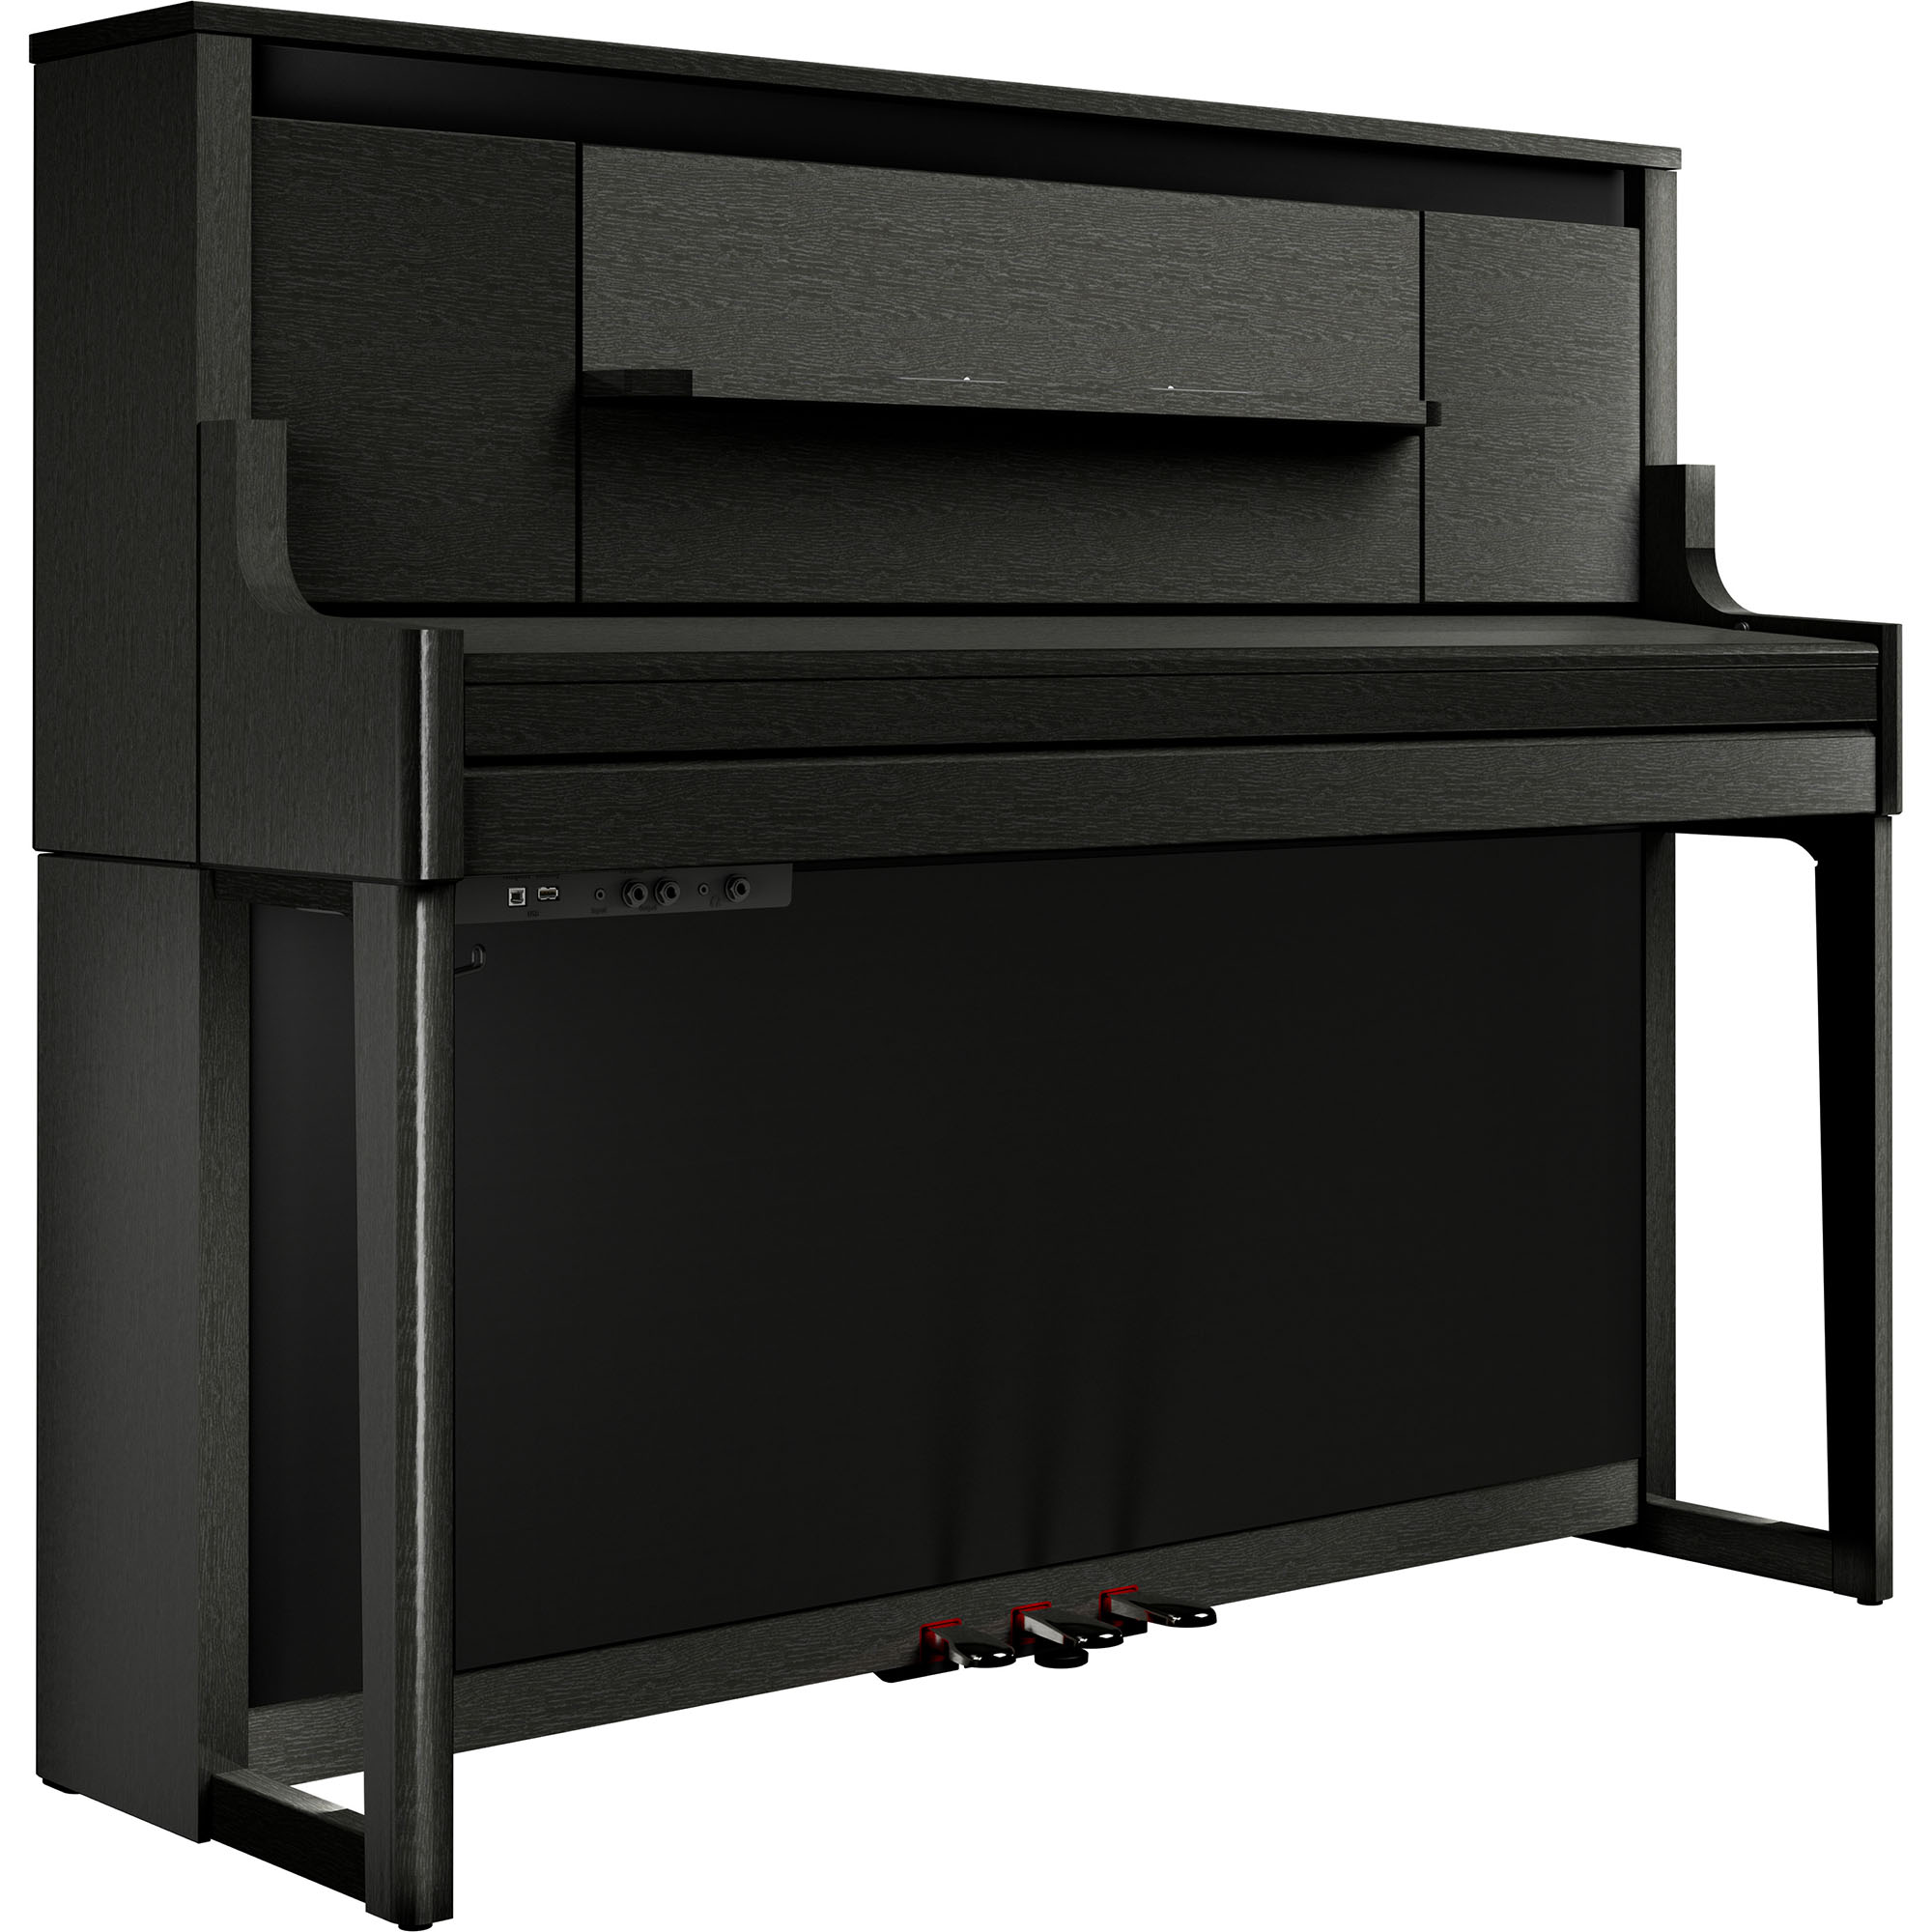 Roland Lx-9-ch - Charcoal Black - Digitalpiano mit Stand - Variation 1